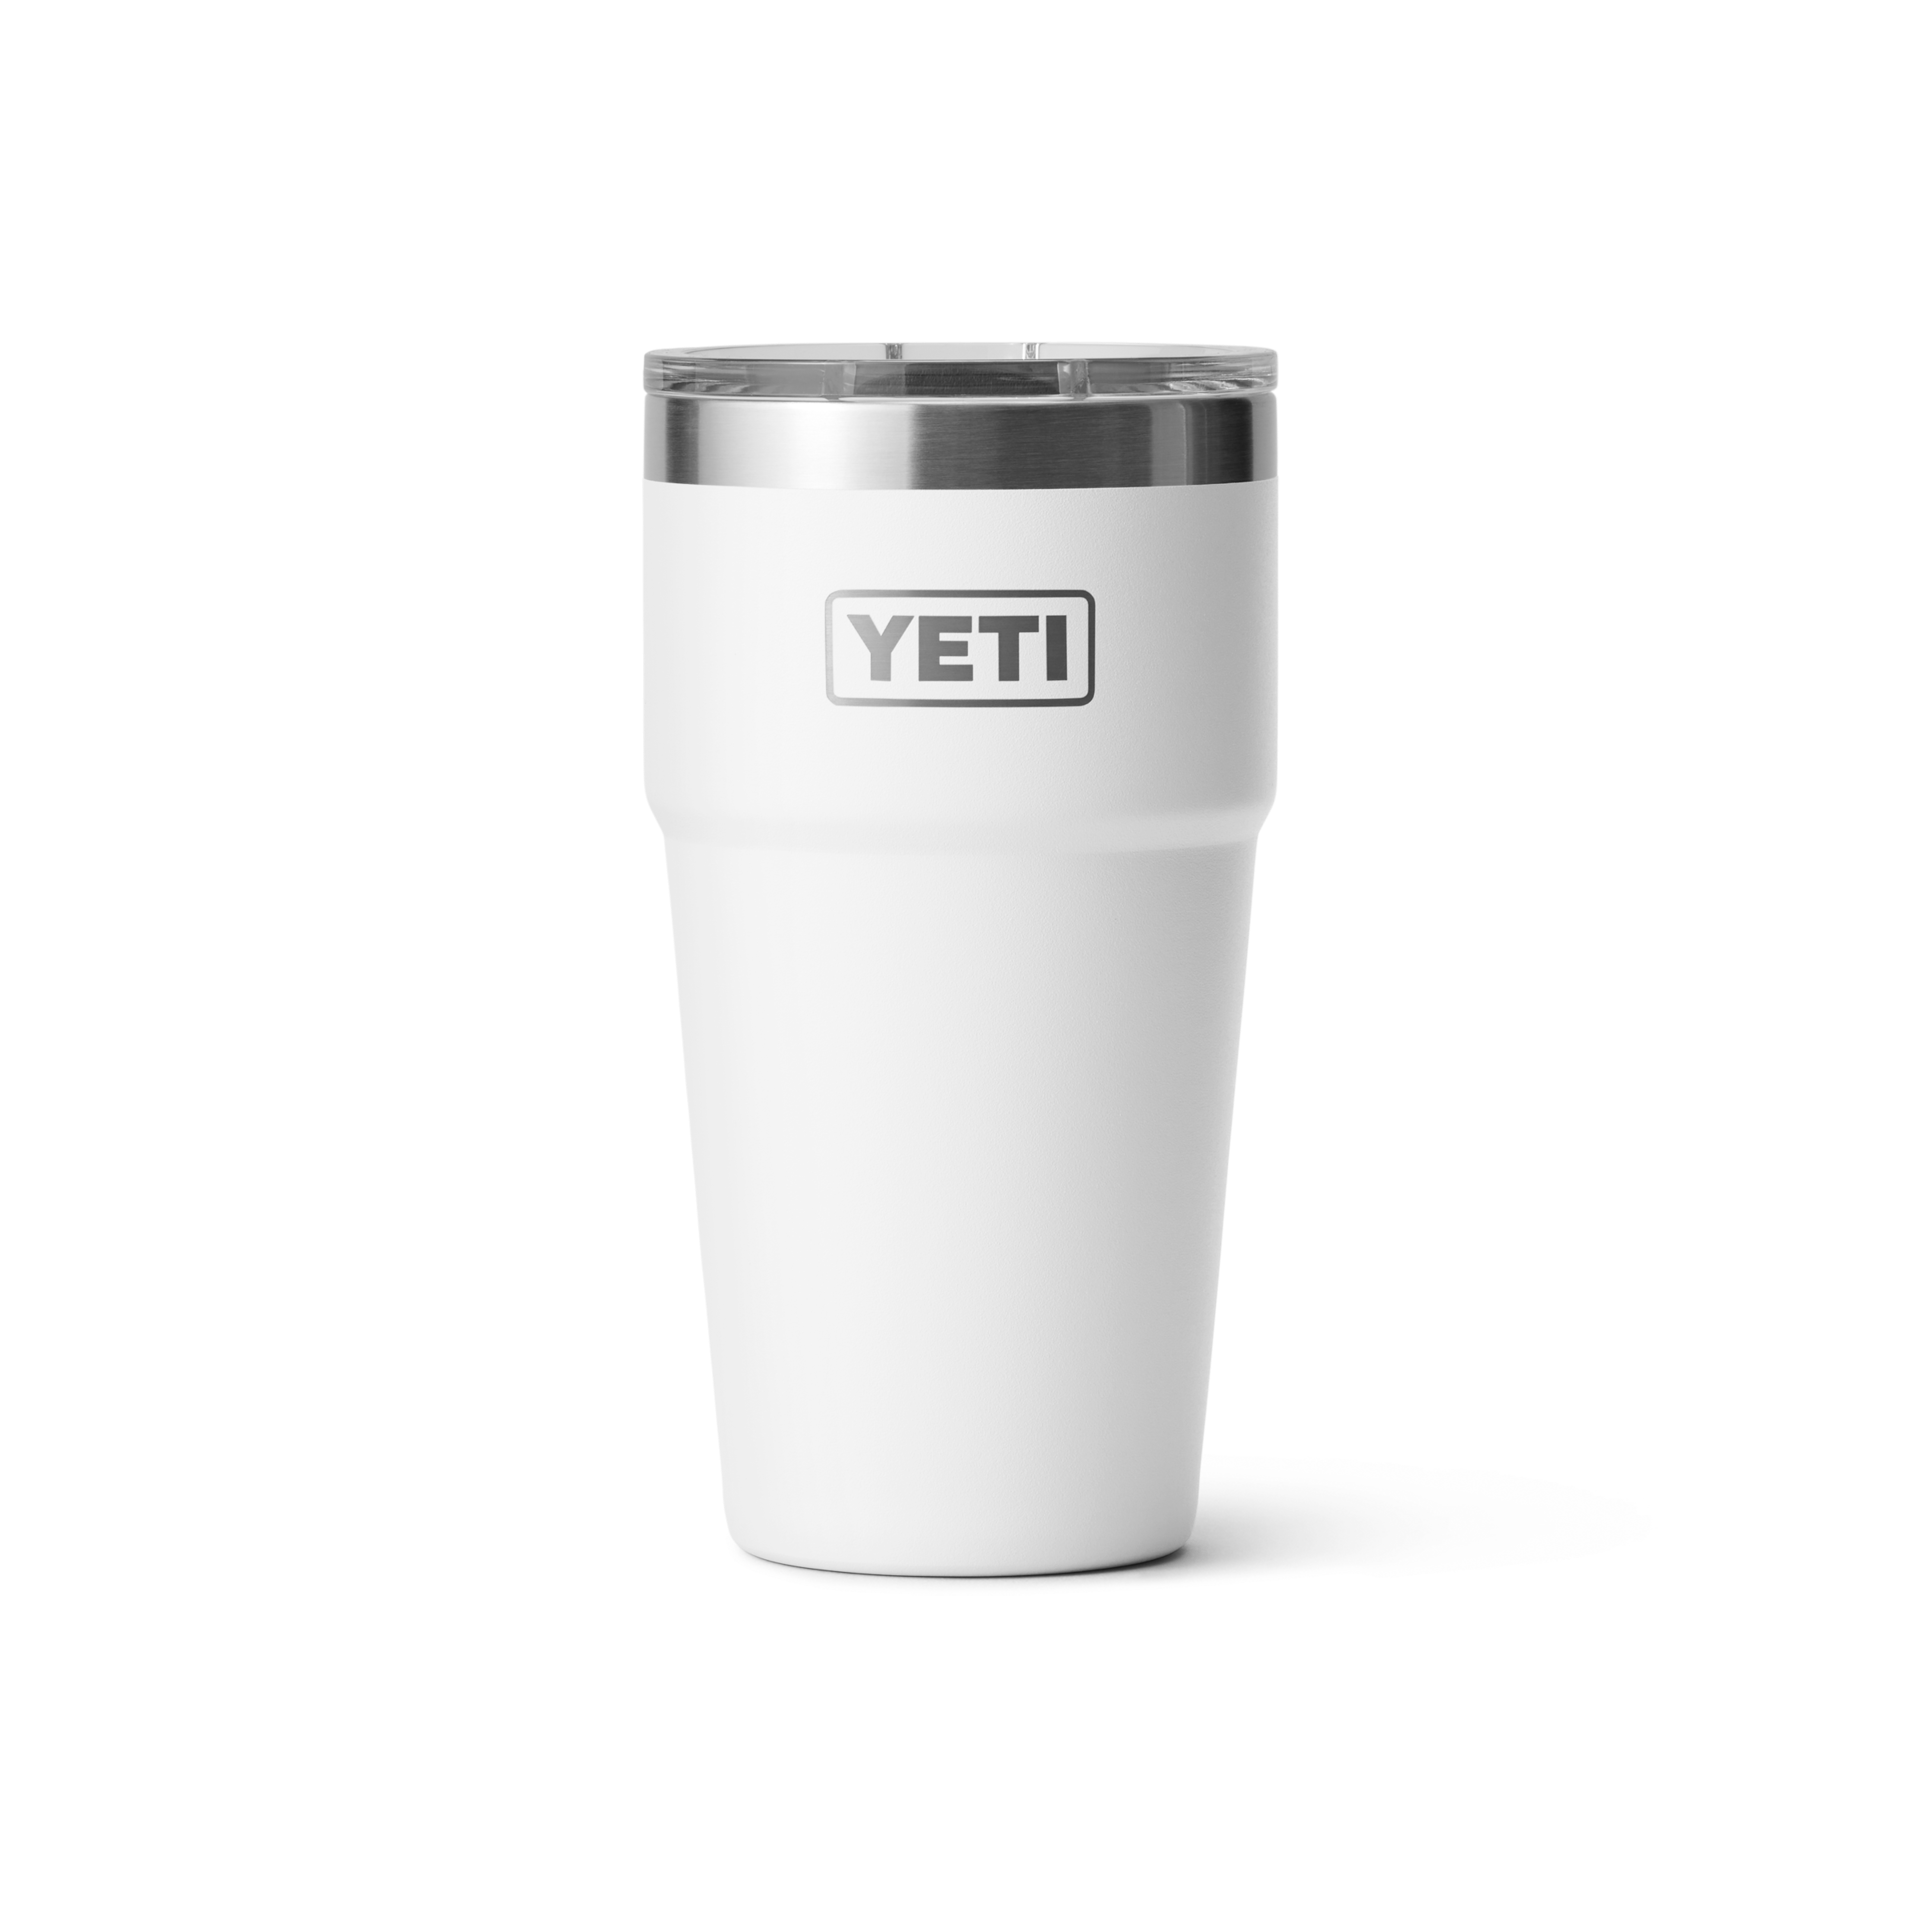 Sustainable Savings Yeti Loadout Bucket, White, 5 Gallon, yeti